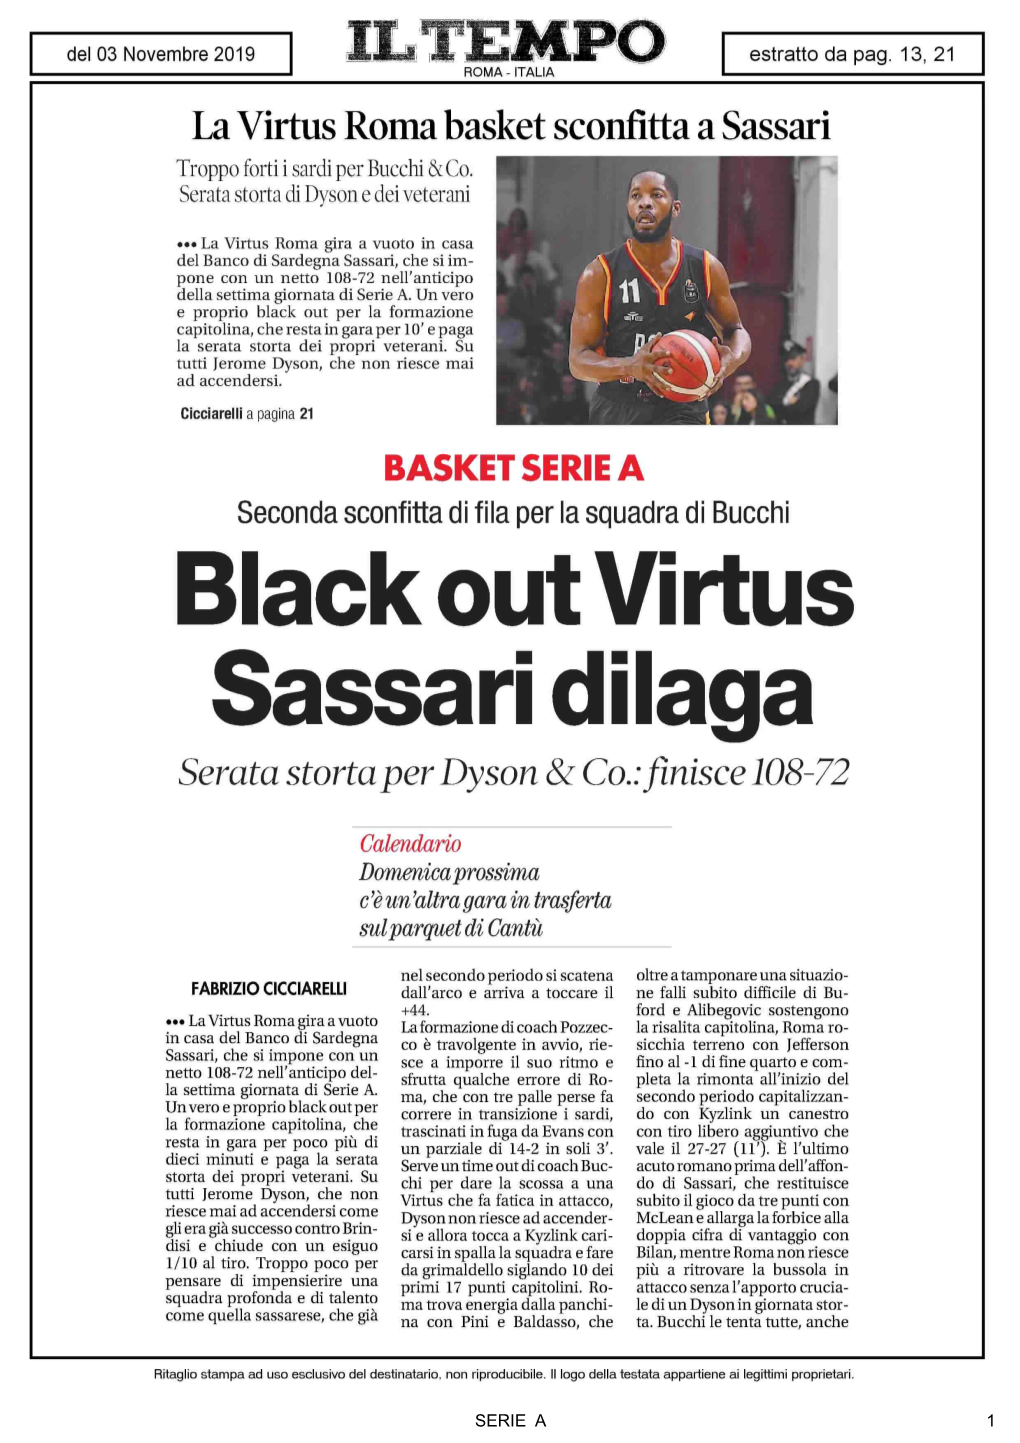 La Virtus Roma Basket Sconfitta a Sassari Troppo Forti I Sardi Per Bucchi &Co